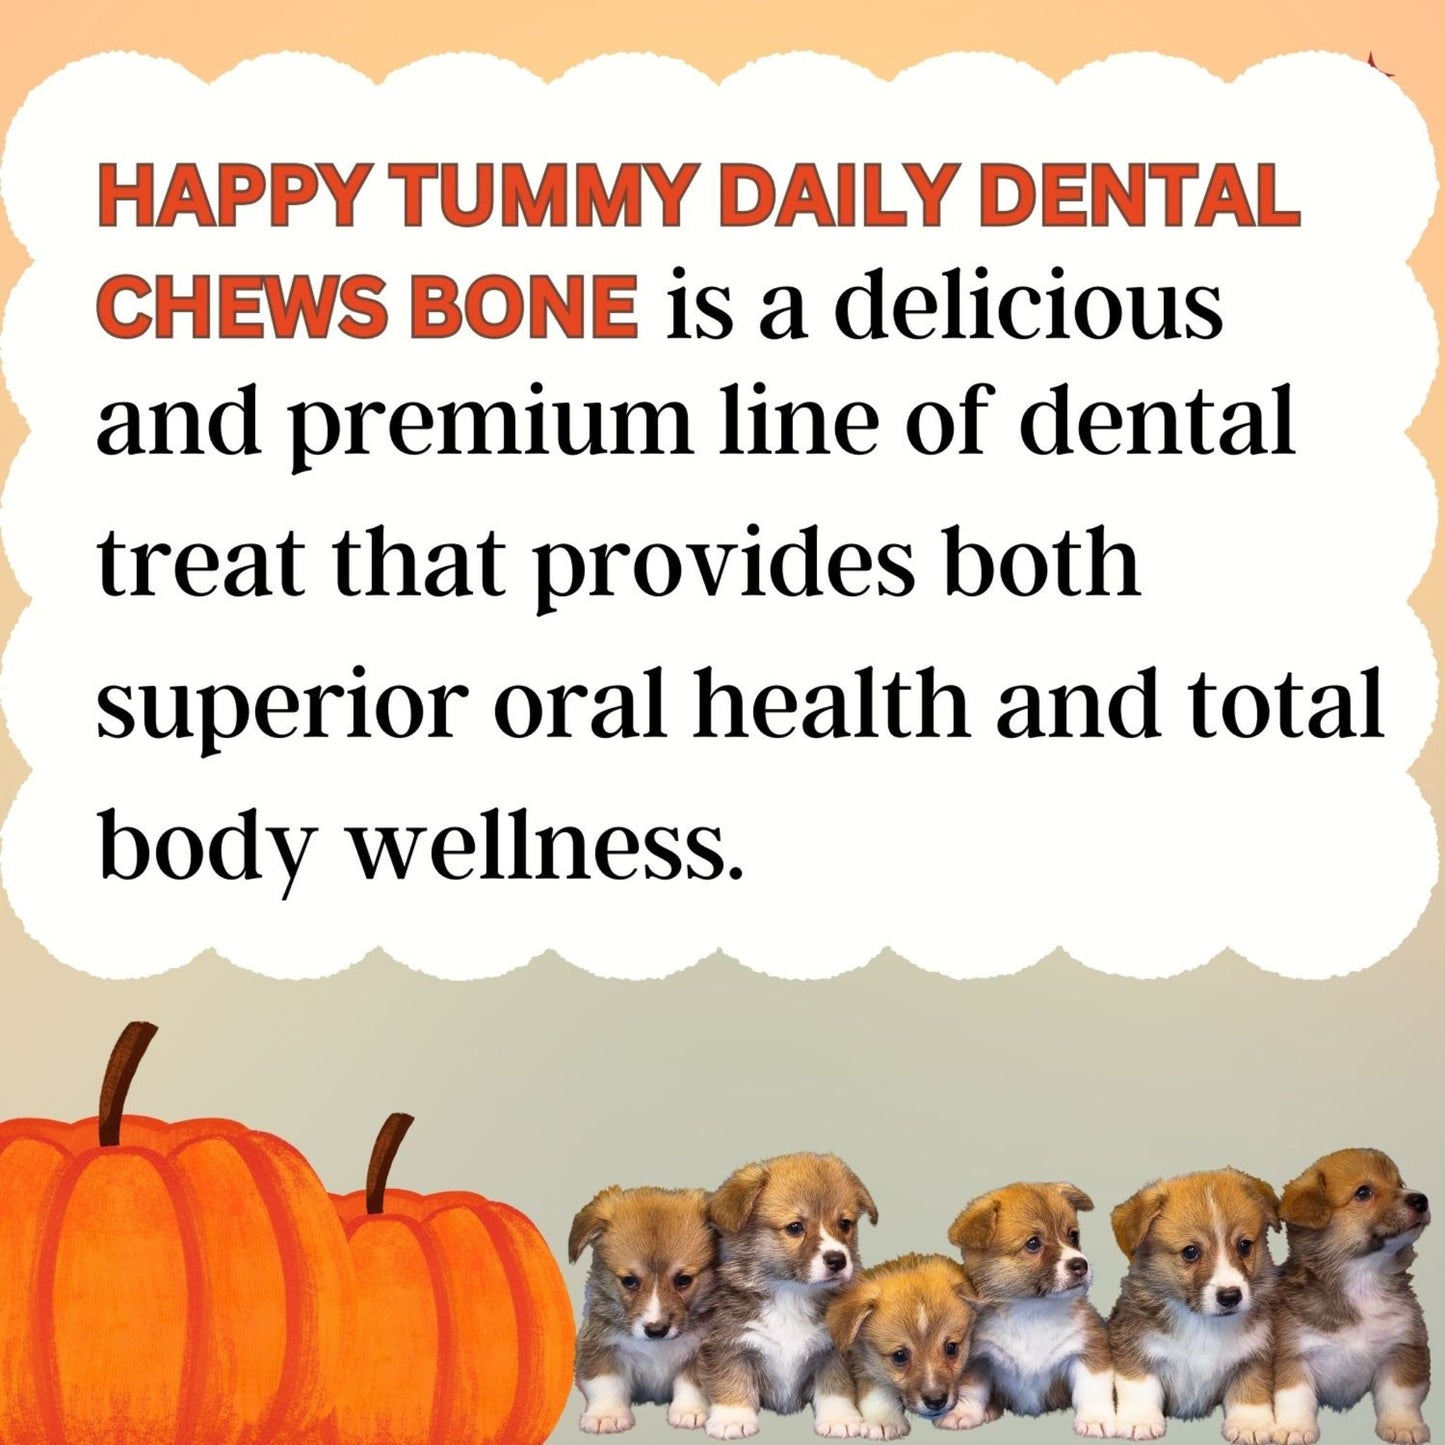 Happy Tummy Dental Chew Bone Treat for Dogs - 21Pcs, Small (Pumpkin)